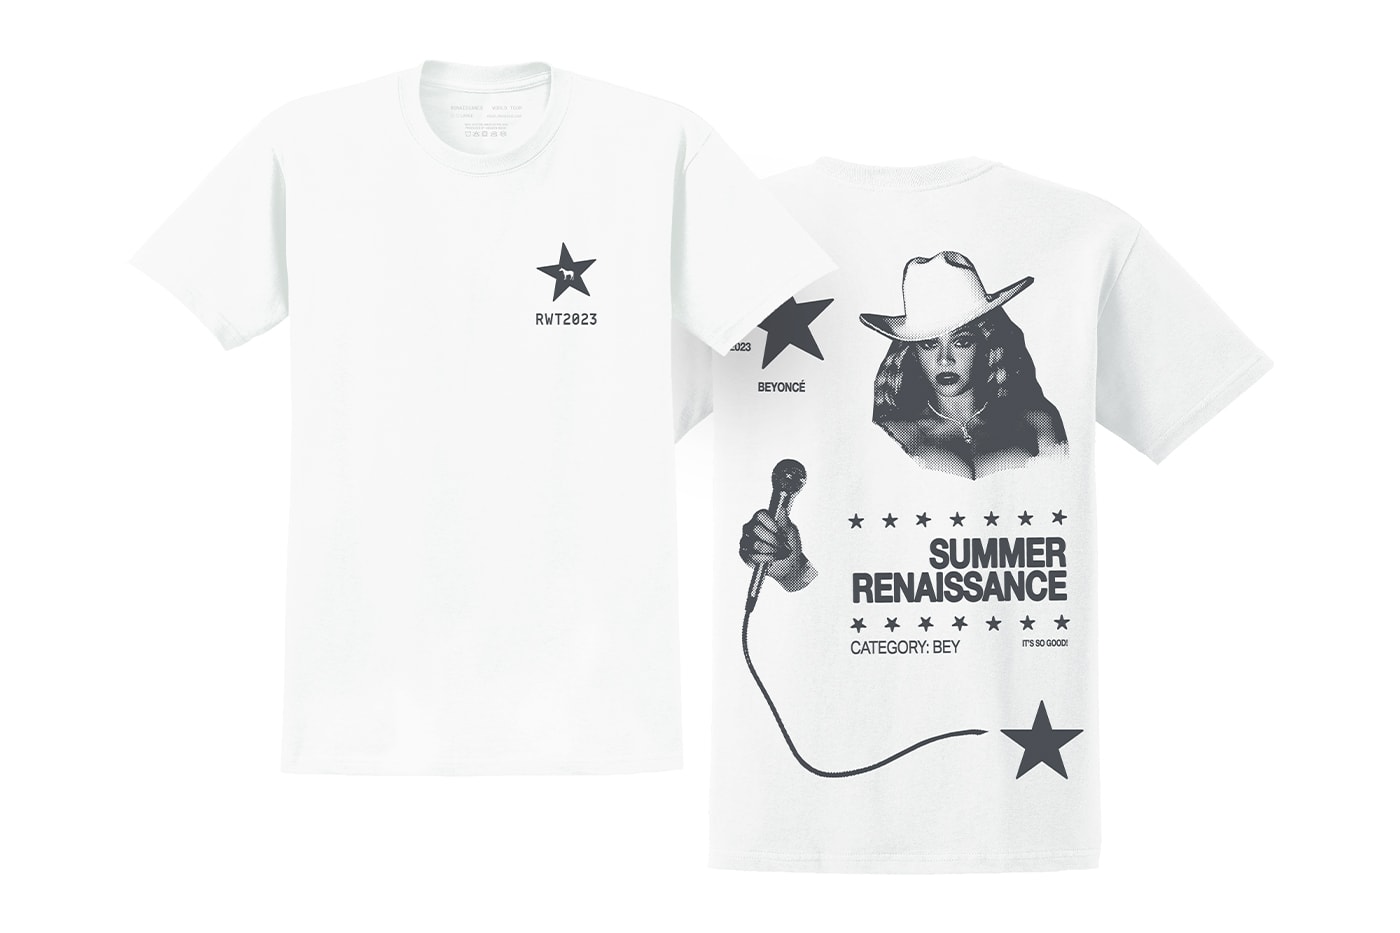 Amazon Music beyonce RENAISSANCE WORLD TOUR merch Drop 2 release info